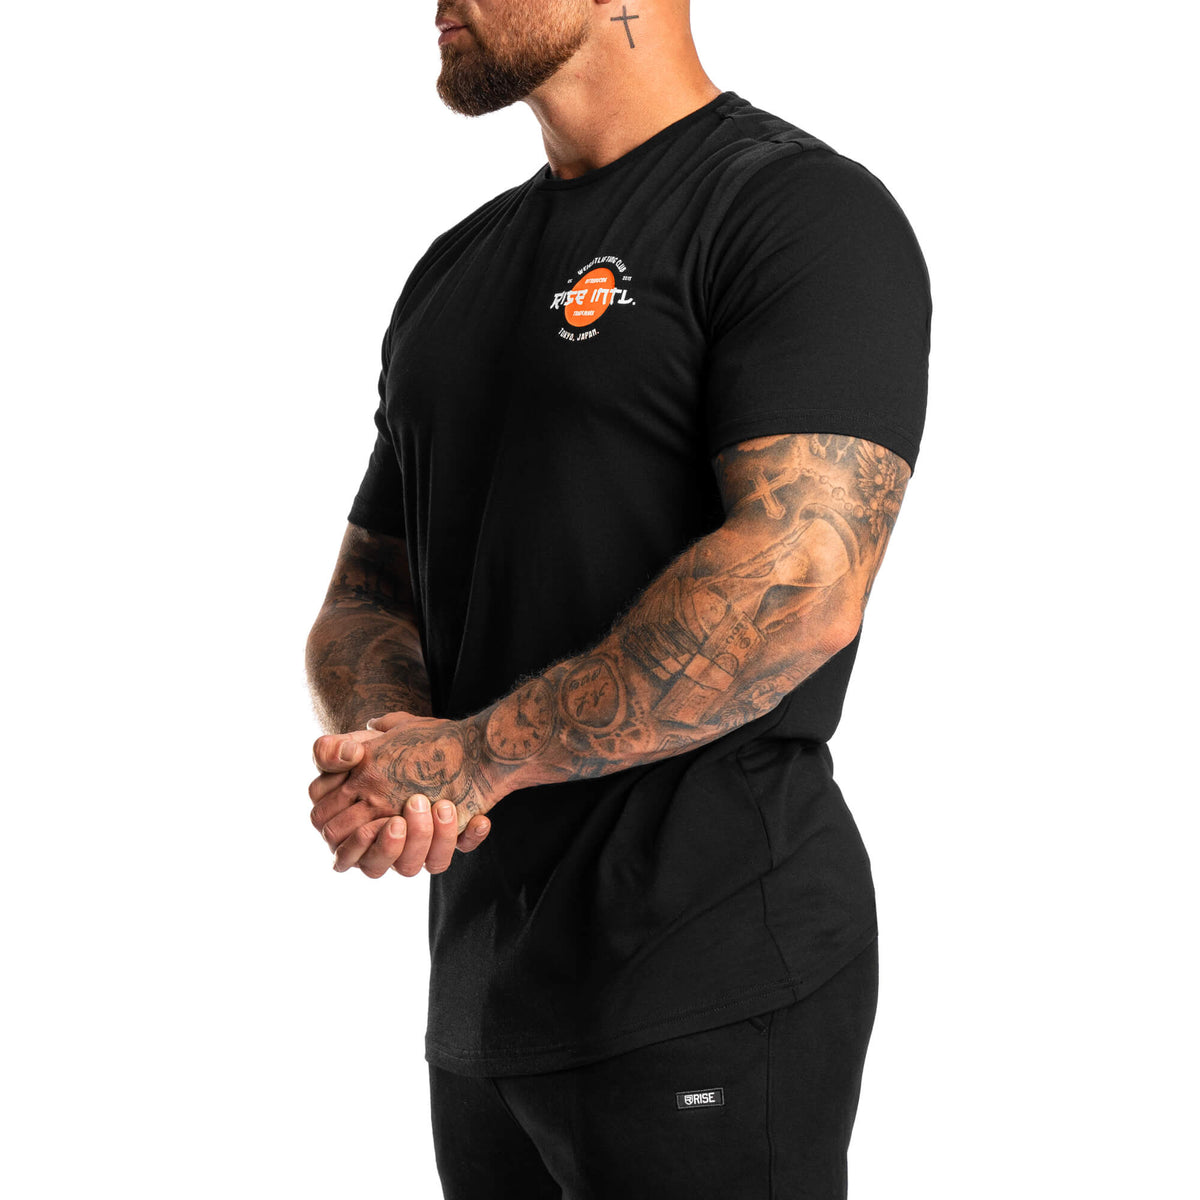 Japan Weightlifting Club Shirt - Black - Rise Canada